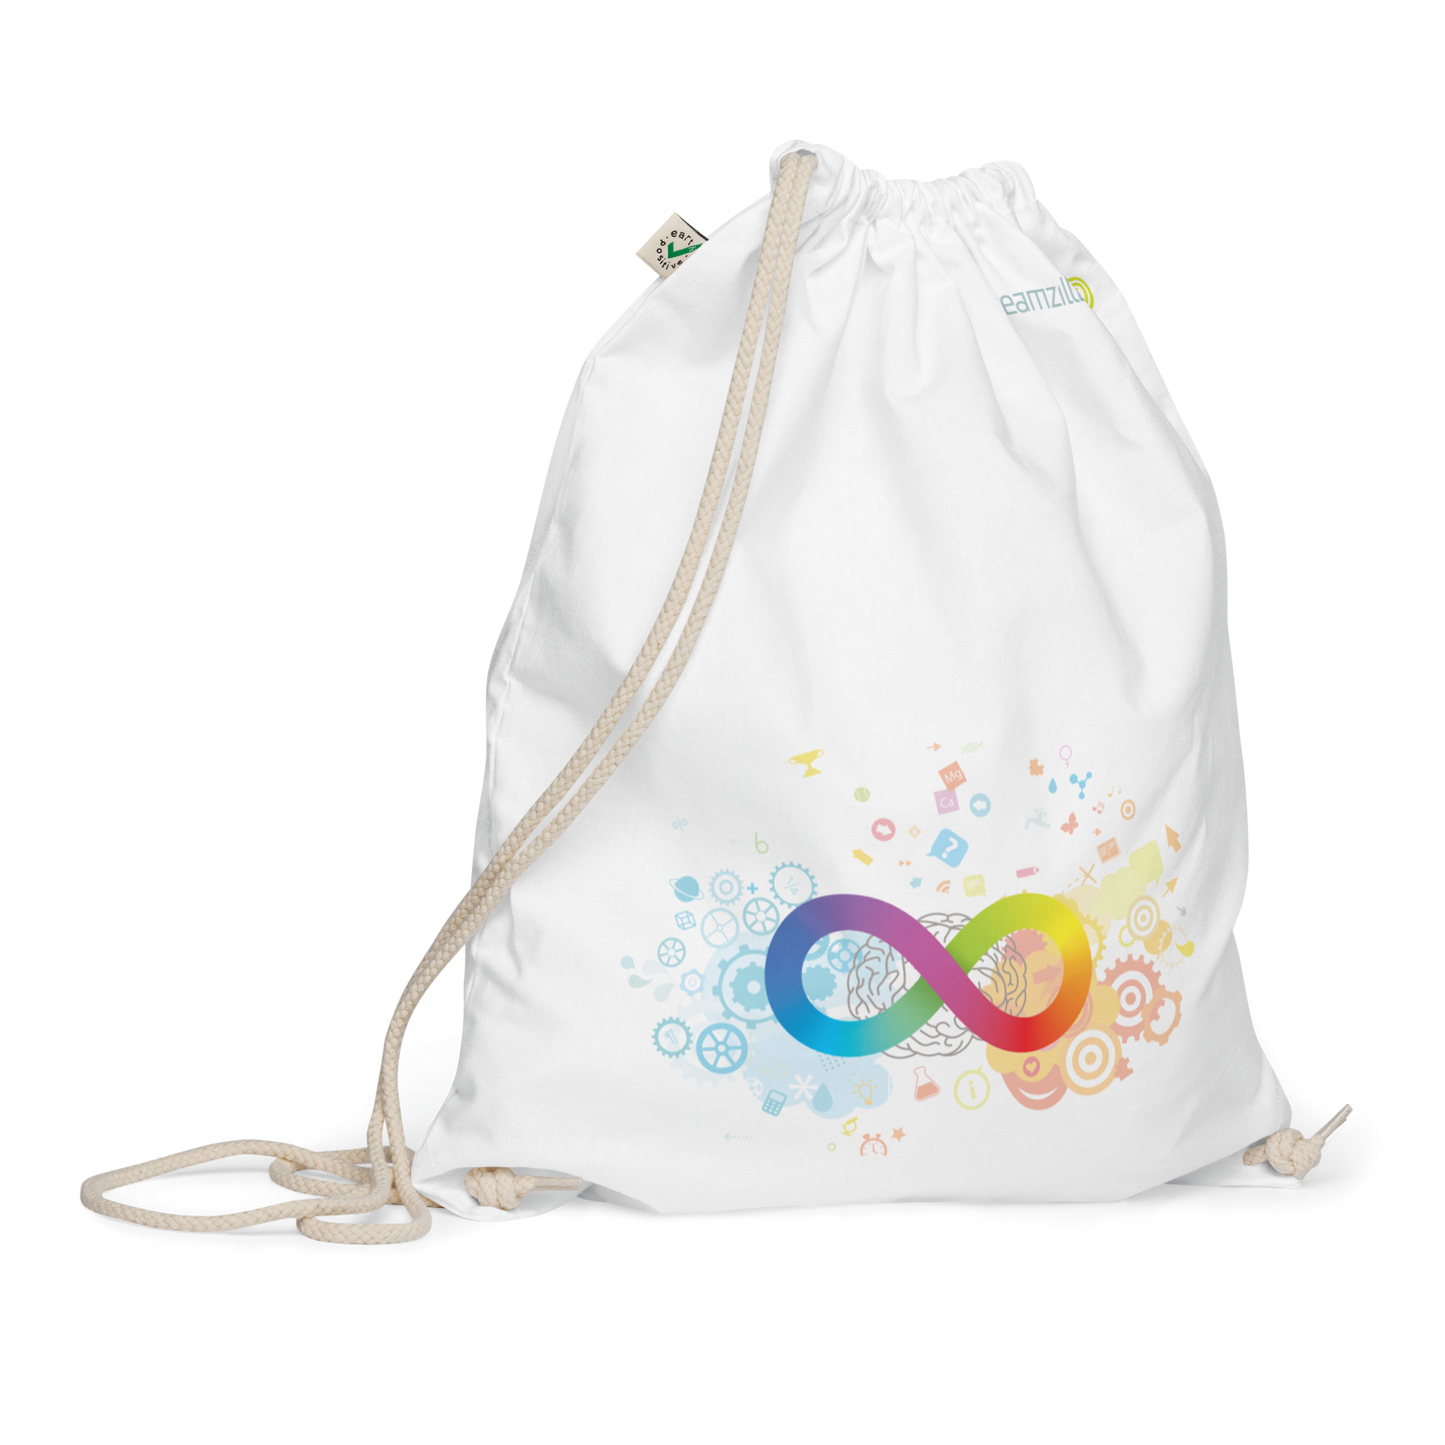 Neurodiversity Rainbow Infinity EarthPositive Cotton Drawstring Bag in White